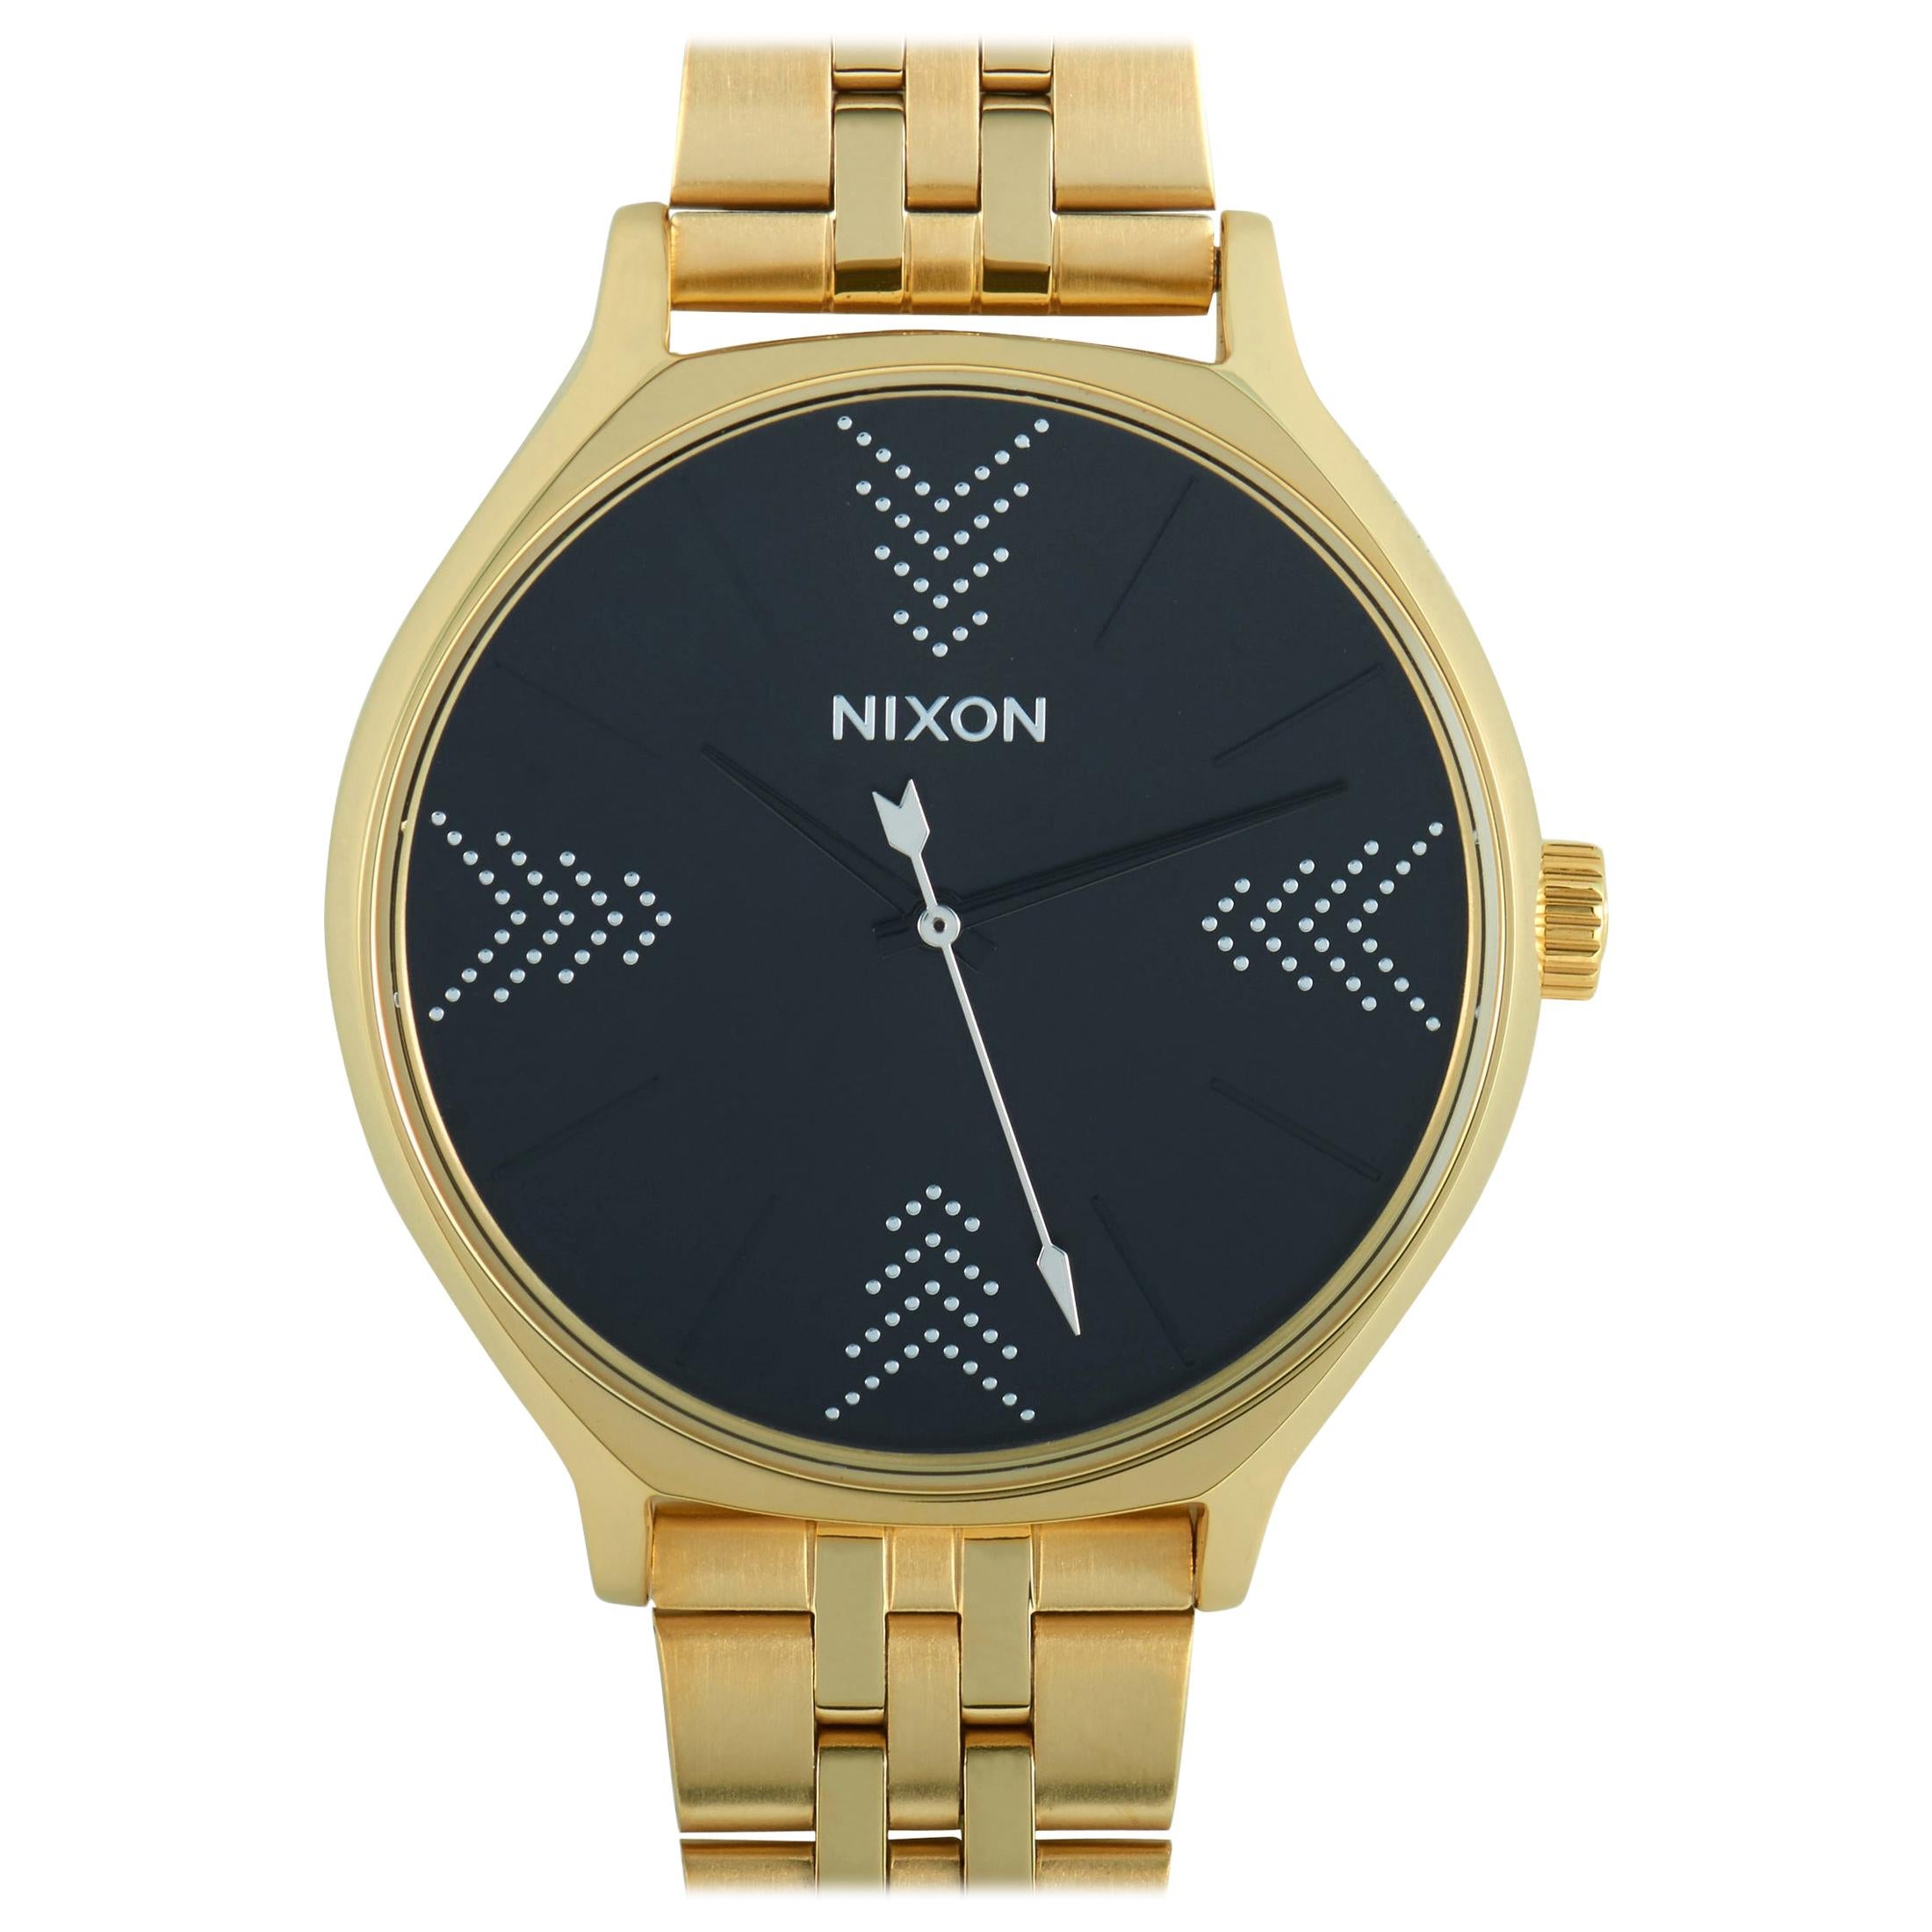 Nixon Clique Gold and Black Watch A1249-2879-00